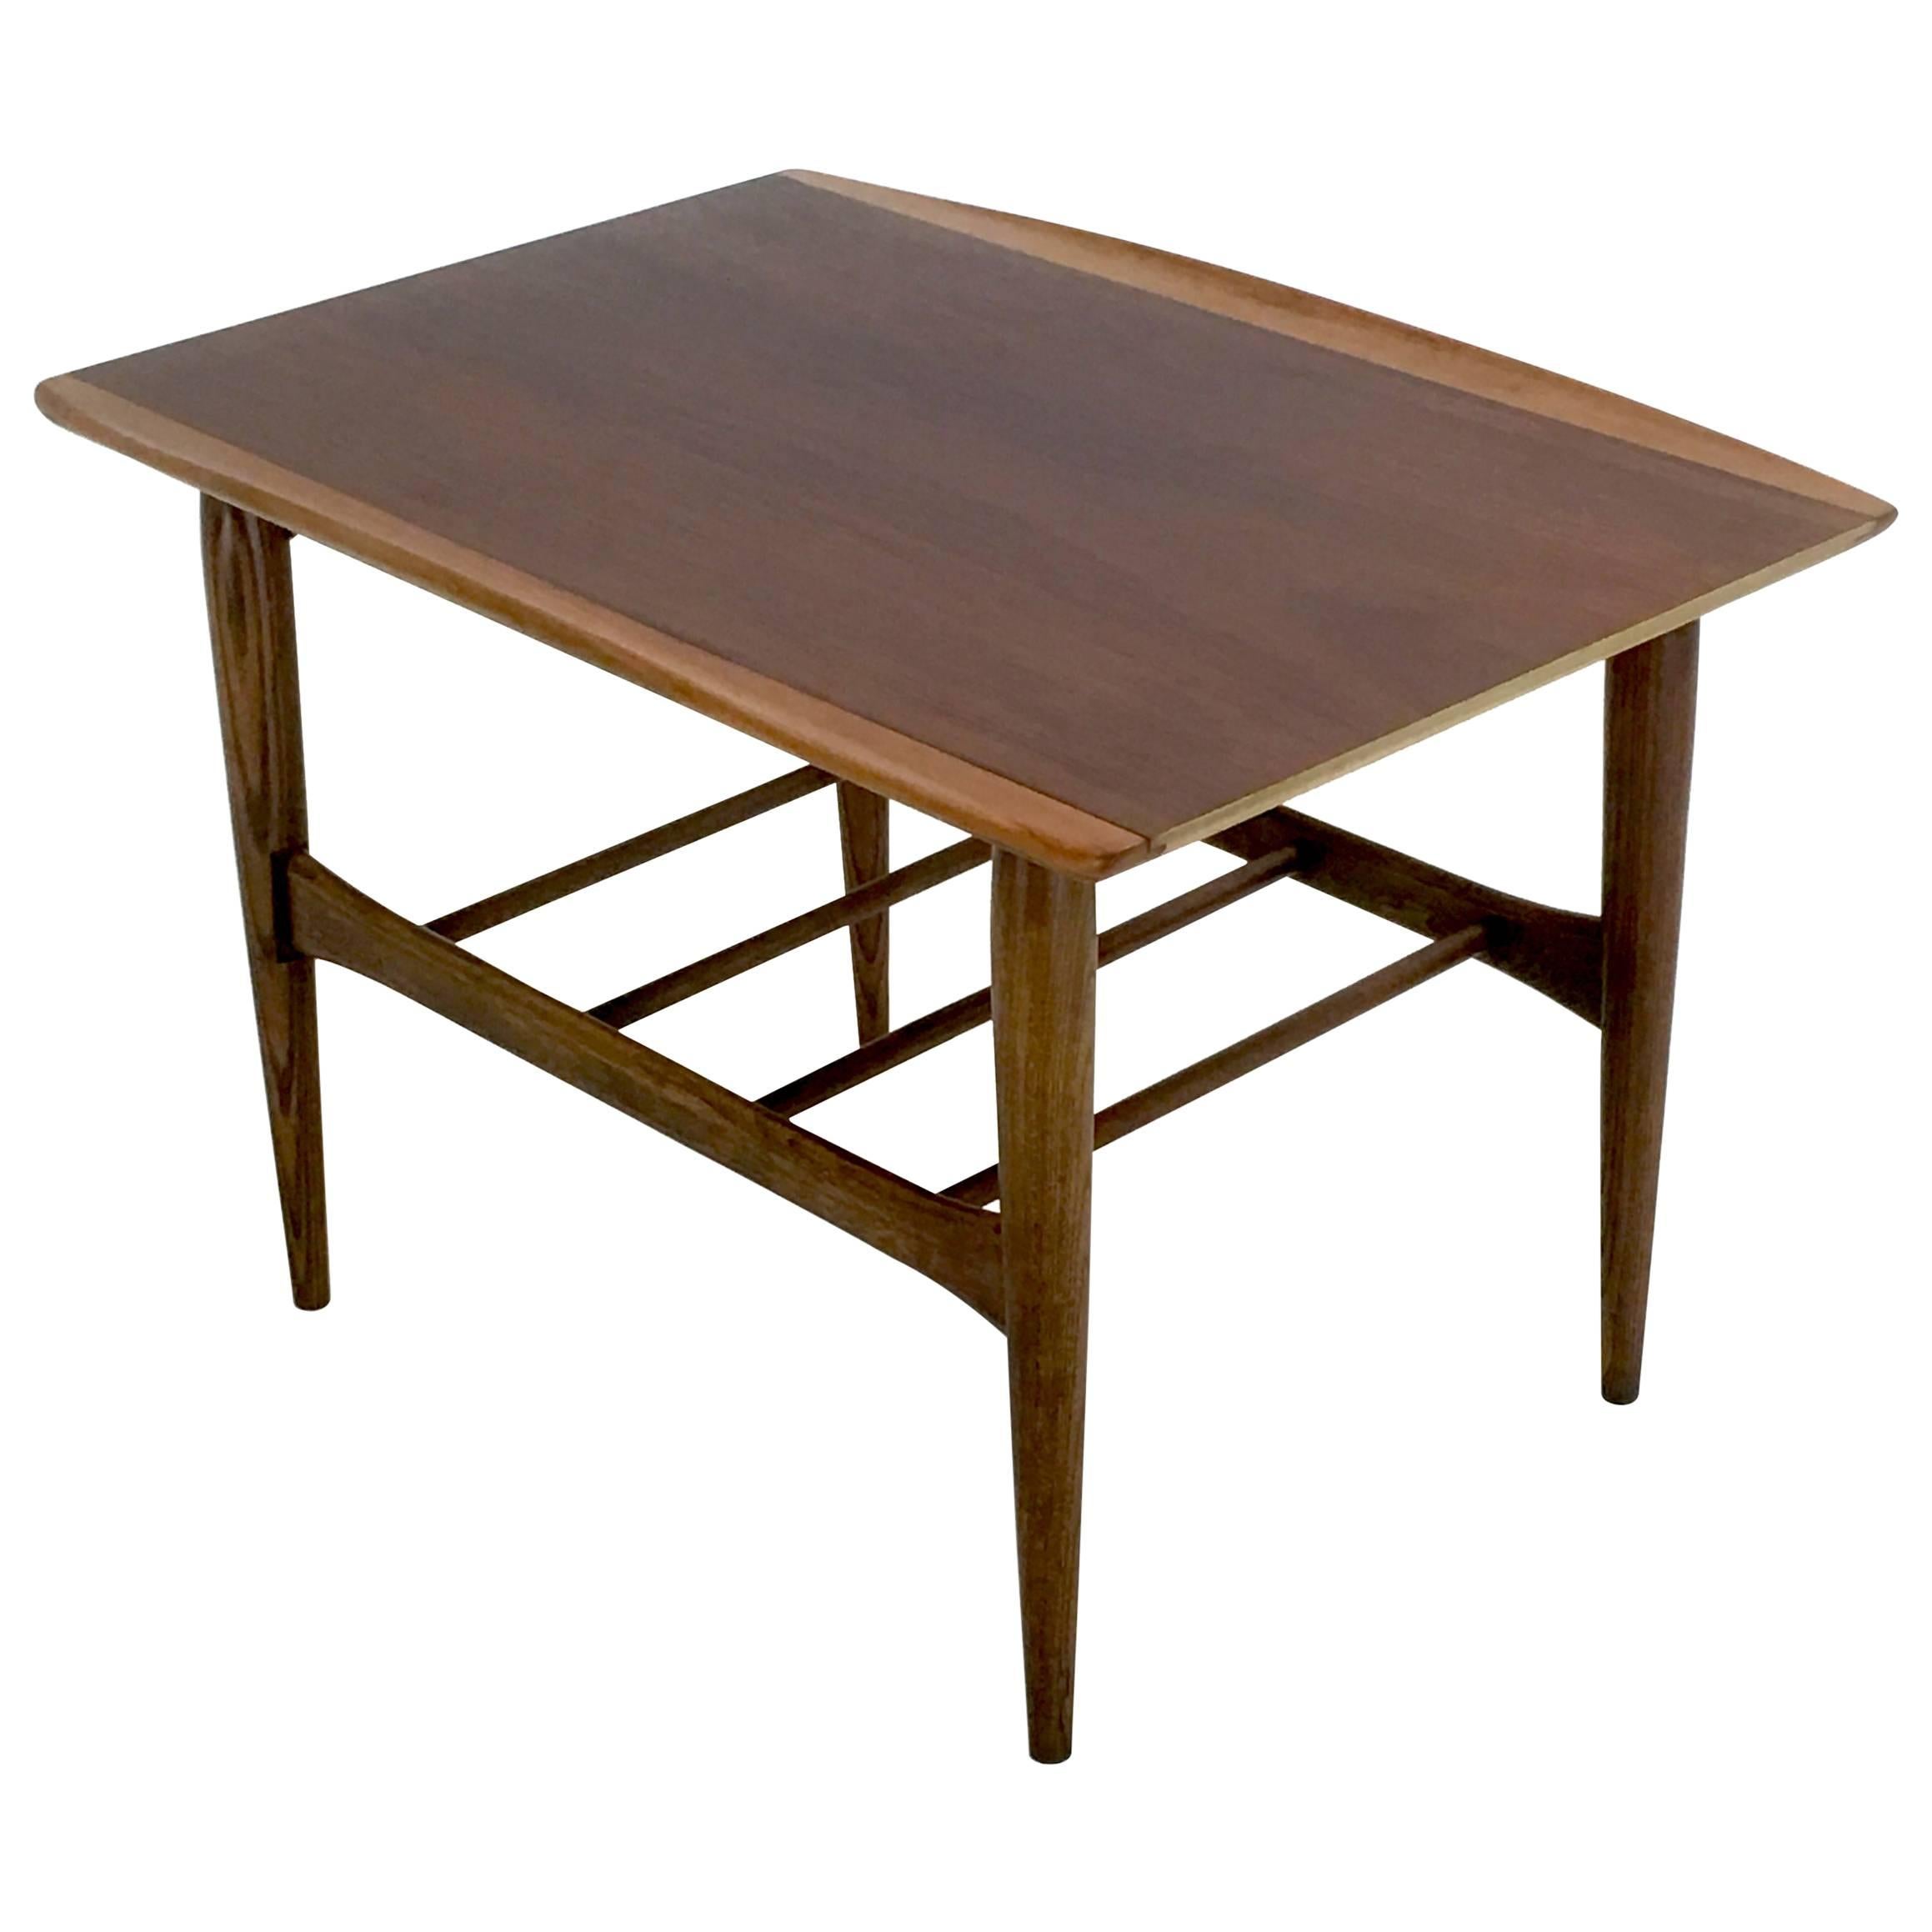 Rectangular Danish Modern Style Table by Bassett Furniture